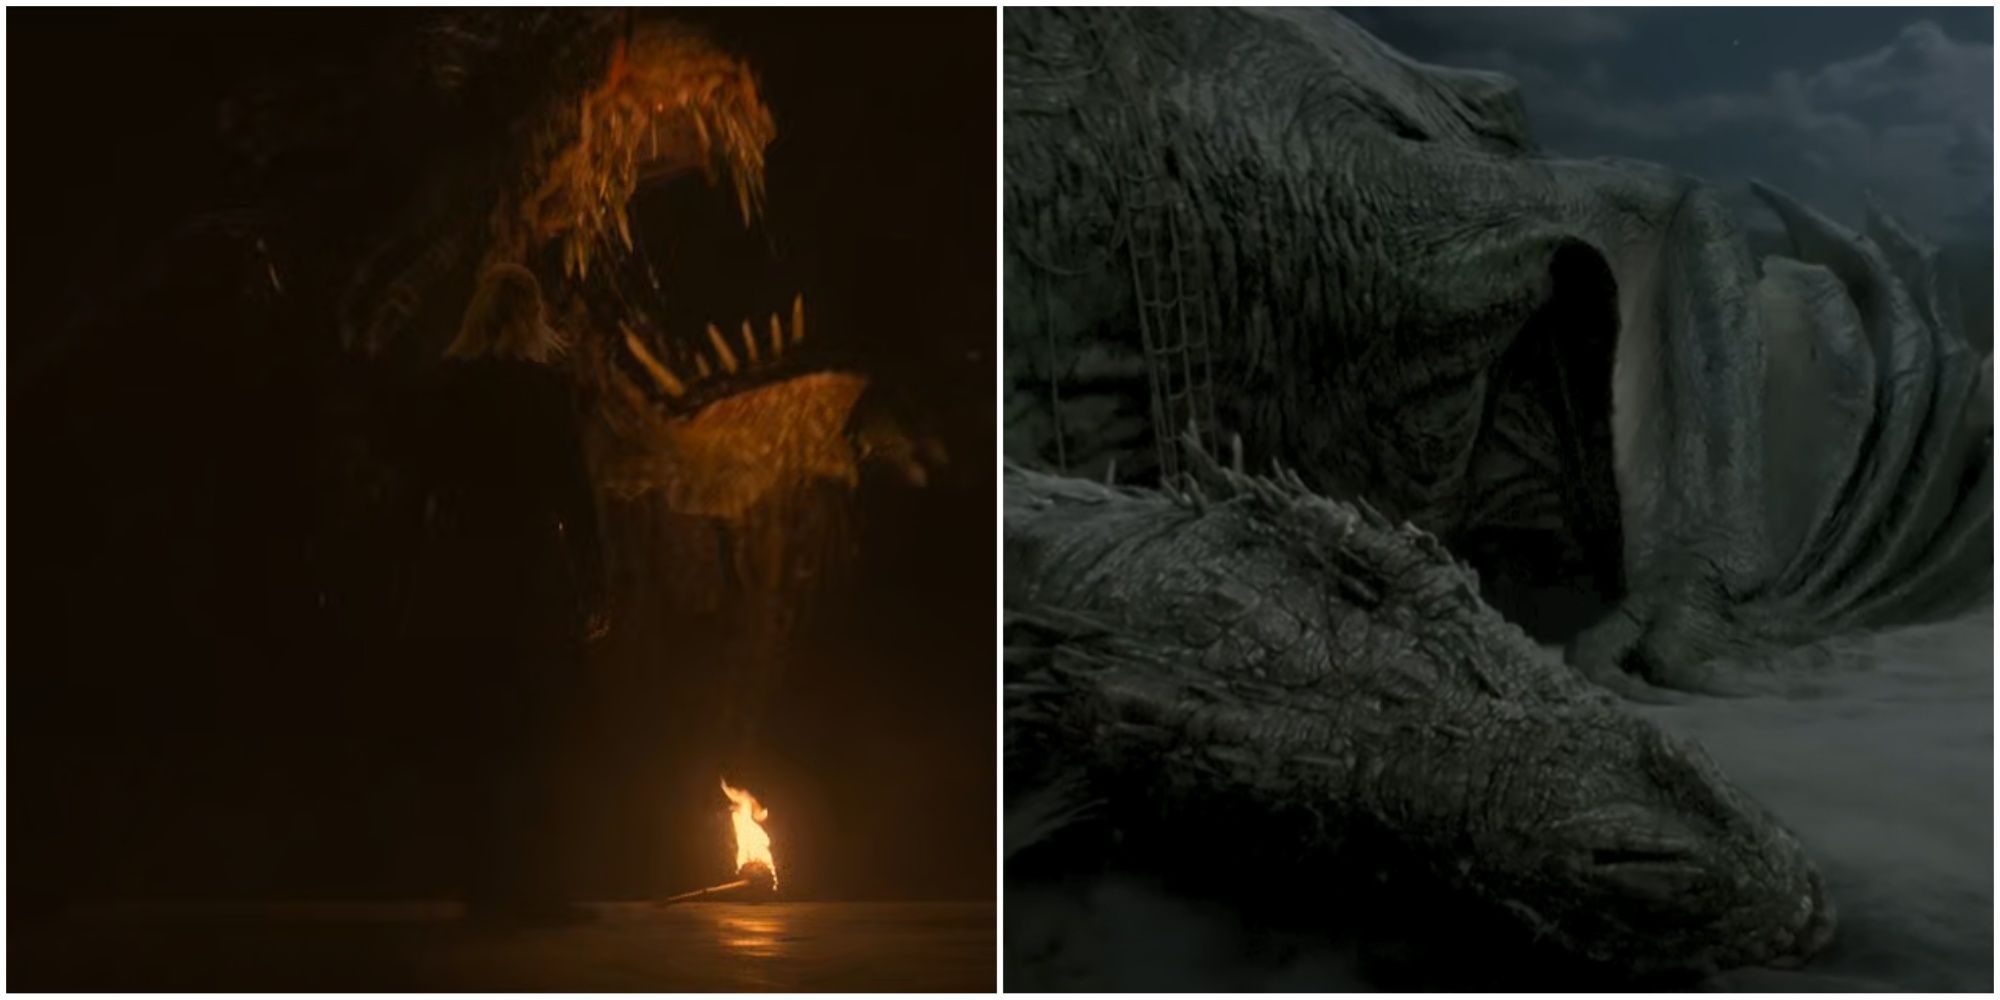 Split image of Vermithor and Daemon Targaryen and Vhagar in House of the Dragon.